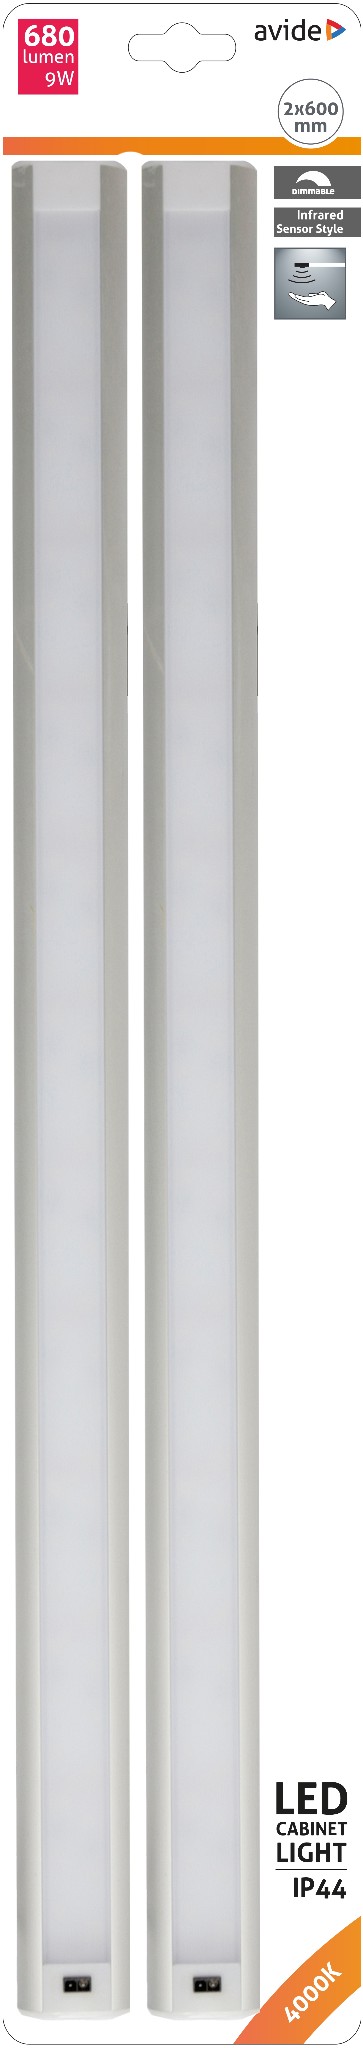 Avide LED Szalag Szekrény Lámpa 9W SMD2835 4000K IP44 2X60cm + Szenzor